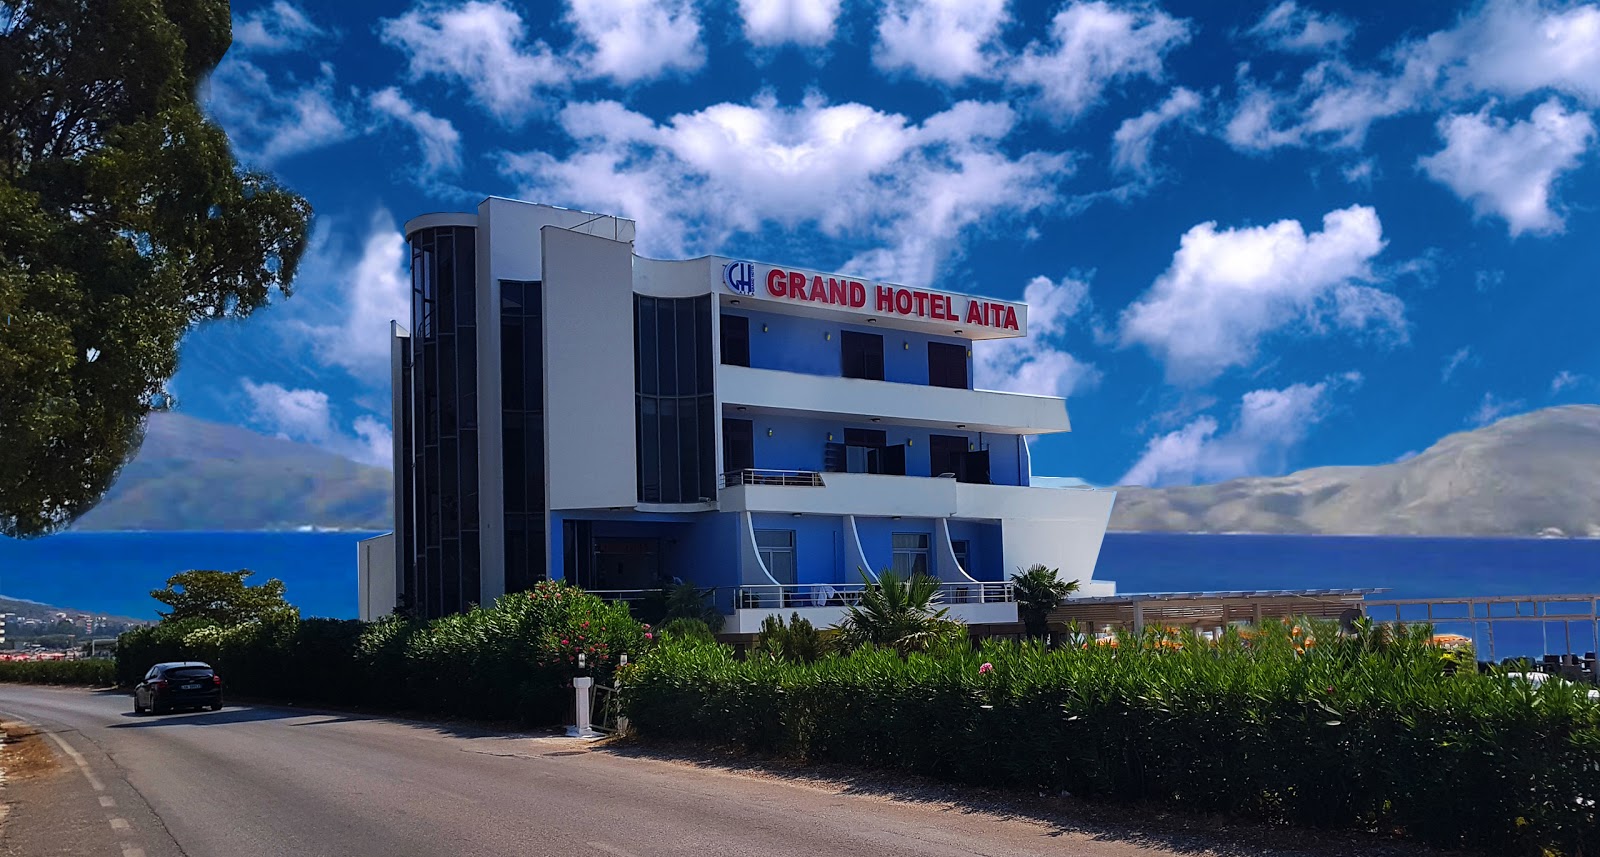 Grand hotel Aita